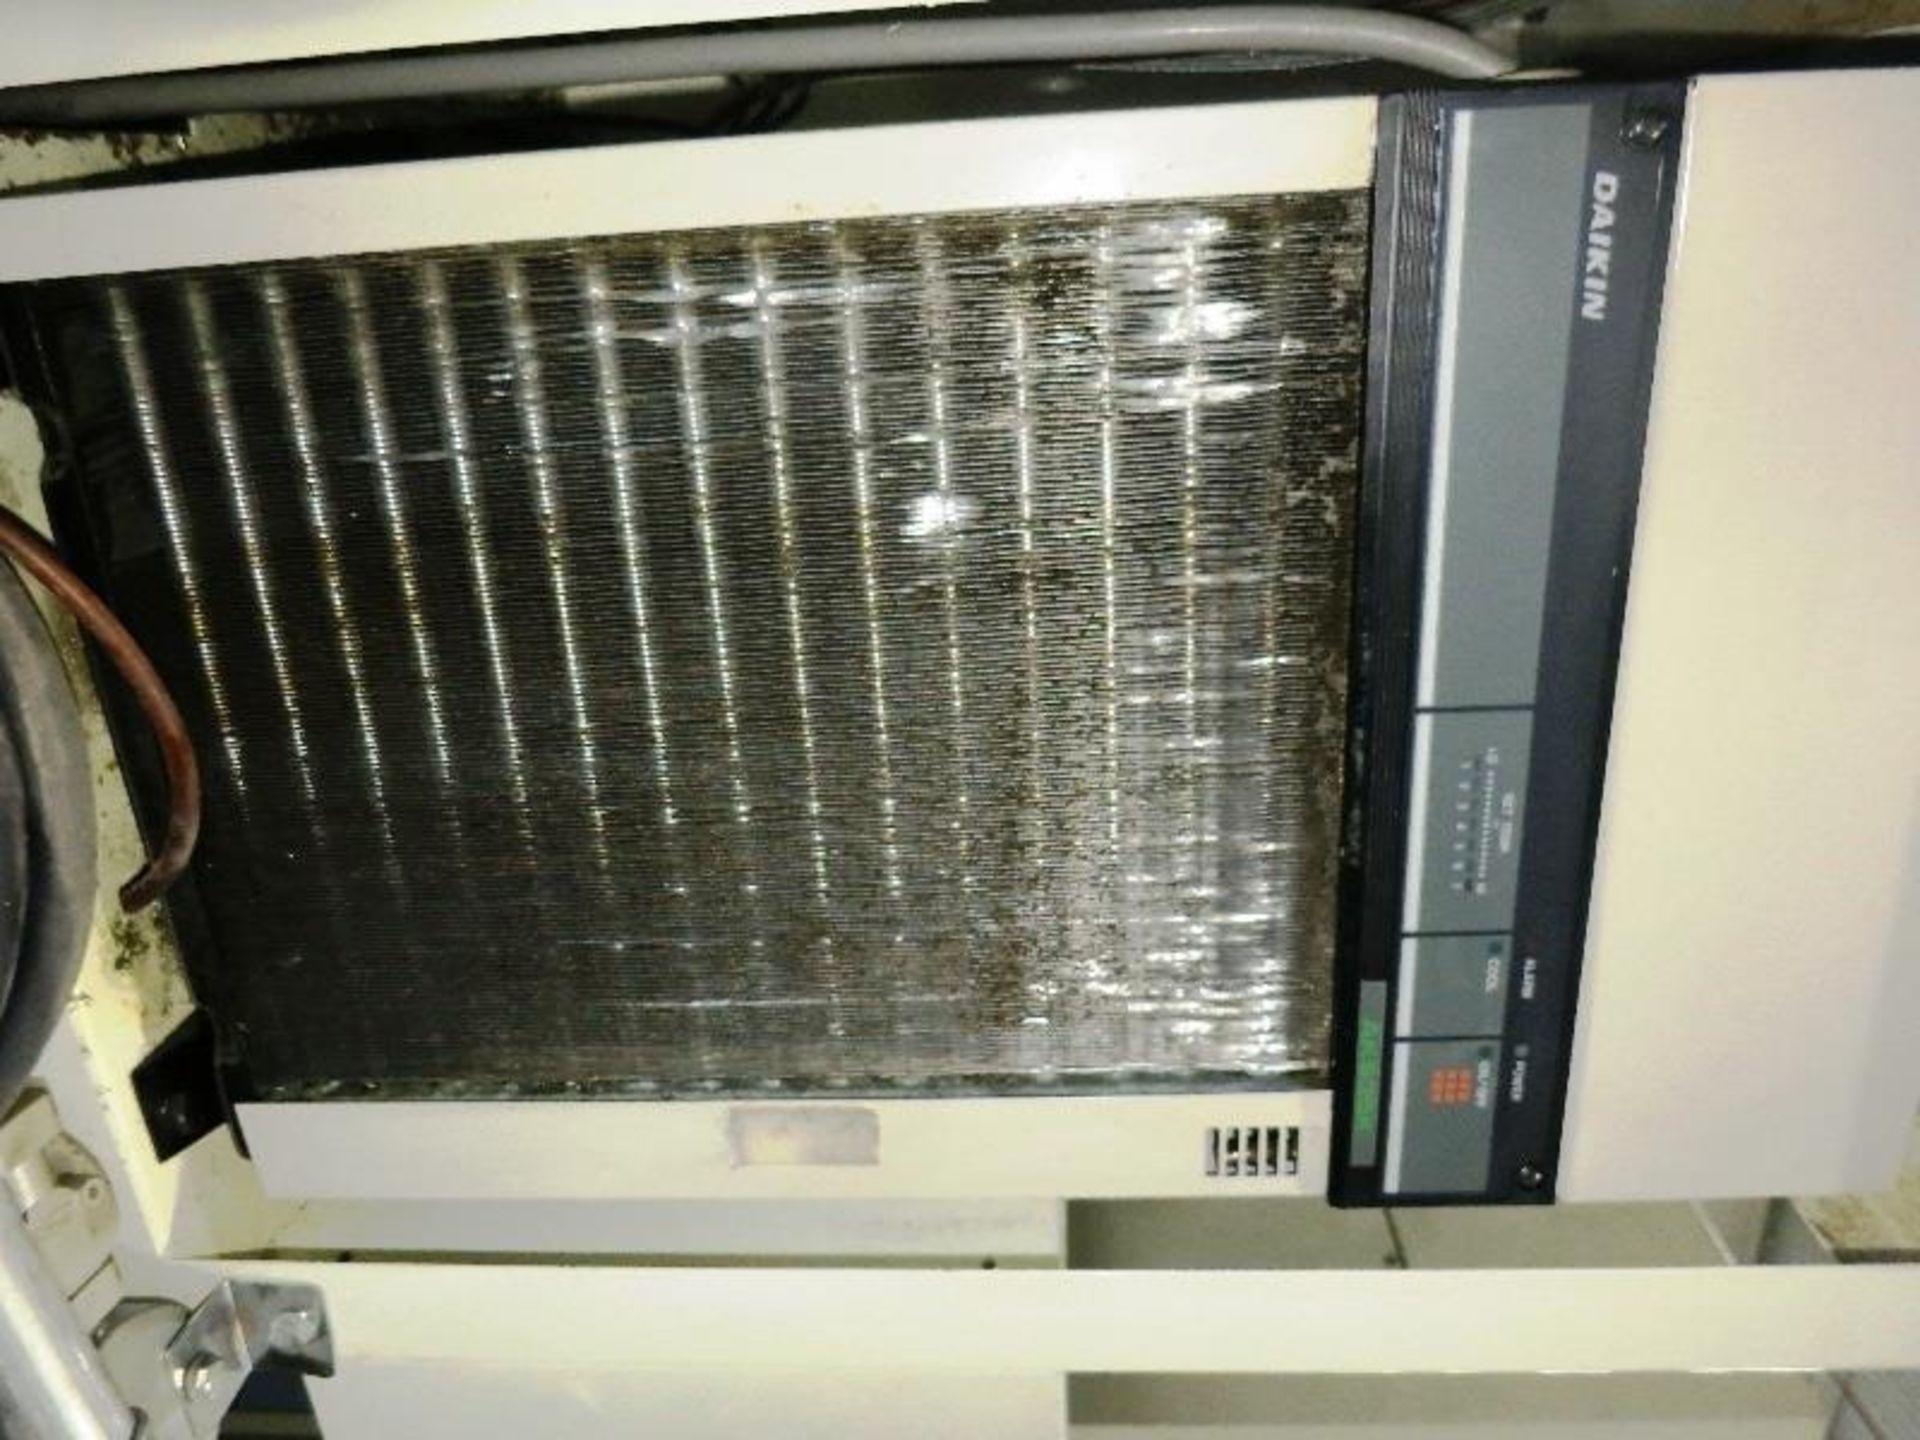 KITAMURA MYCENTER 1 APC CNC VERTICAL MACHINING CENTER, S/N 2585, NEW 1995 - Image 10 of 10